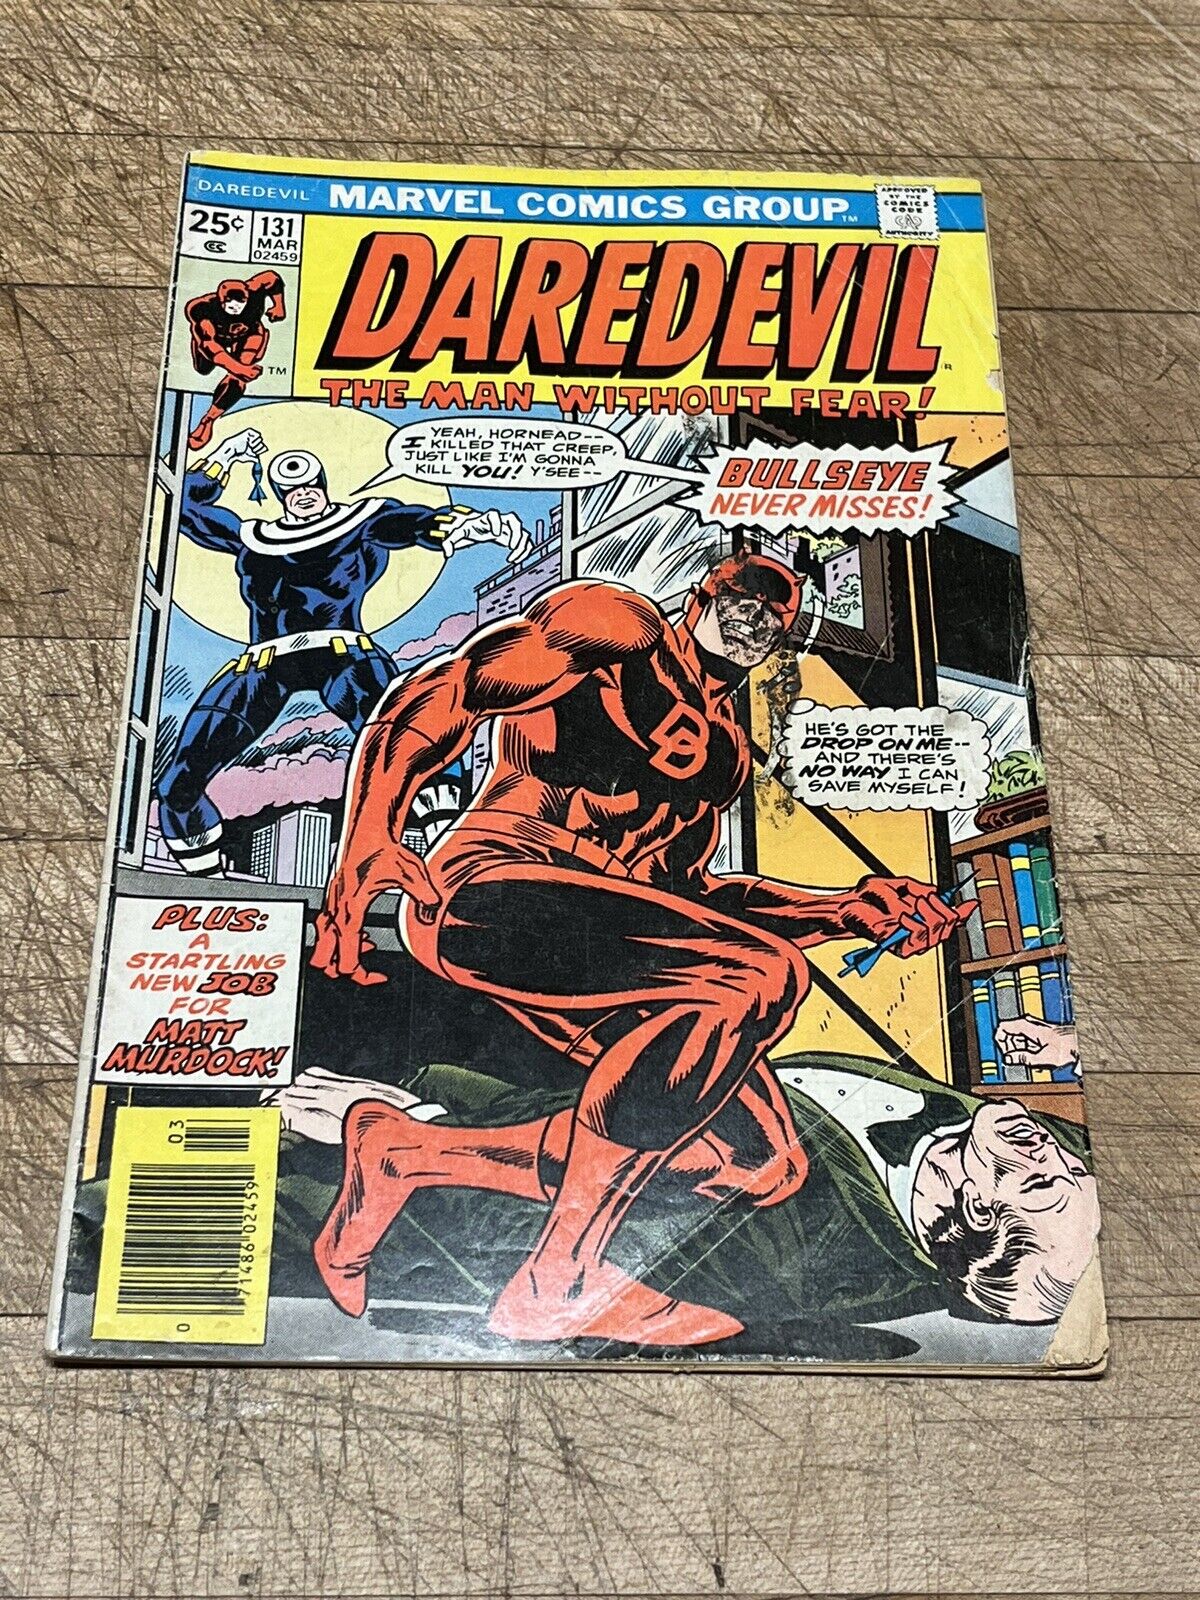 Daredevil #131 1st Appearance Bullseye and Origin Marvel 1976 with MVS